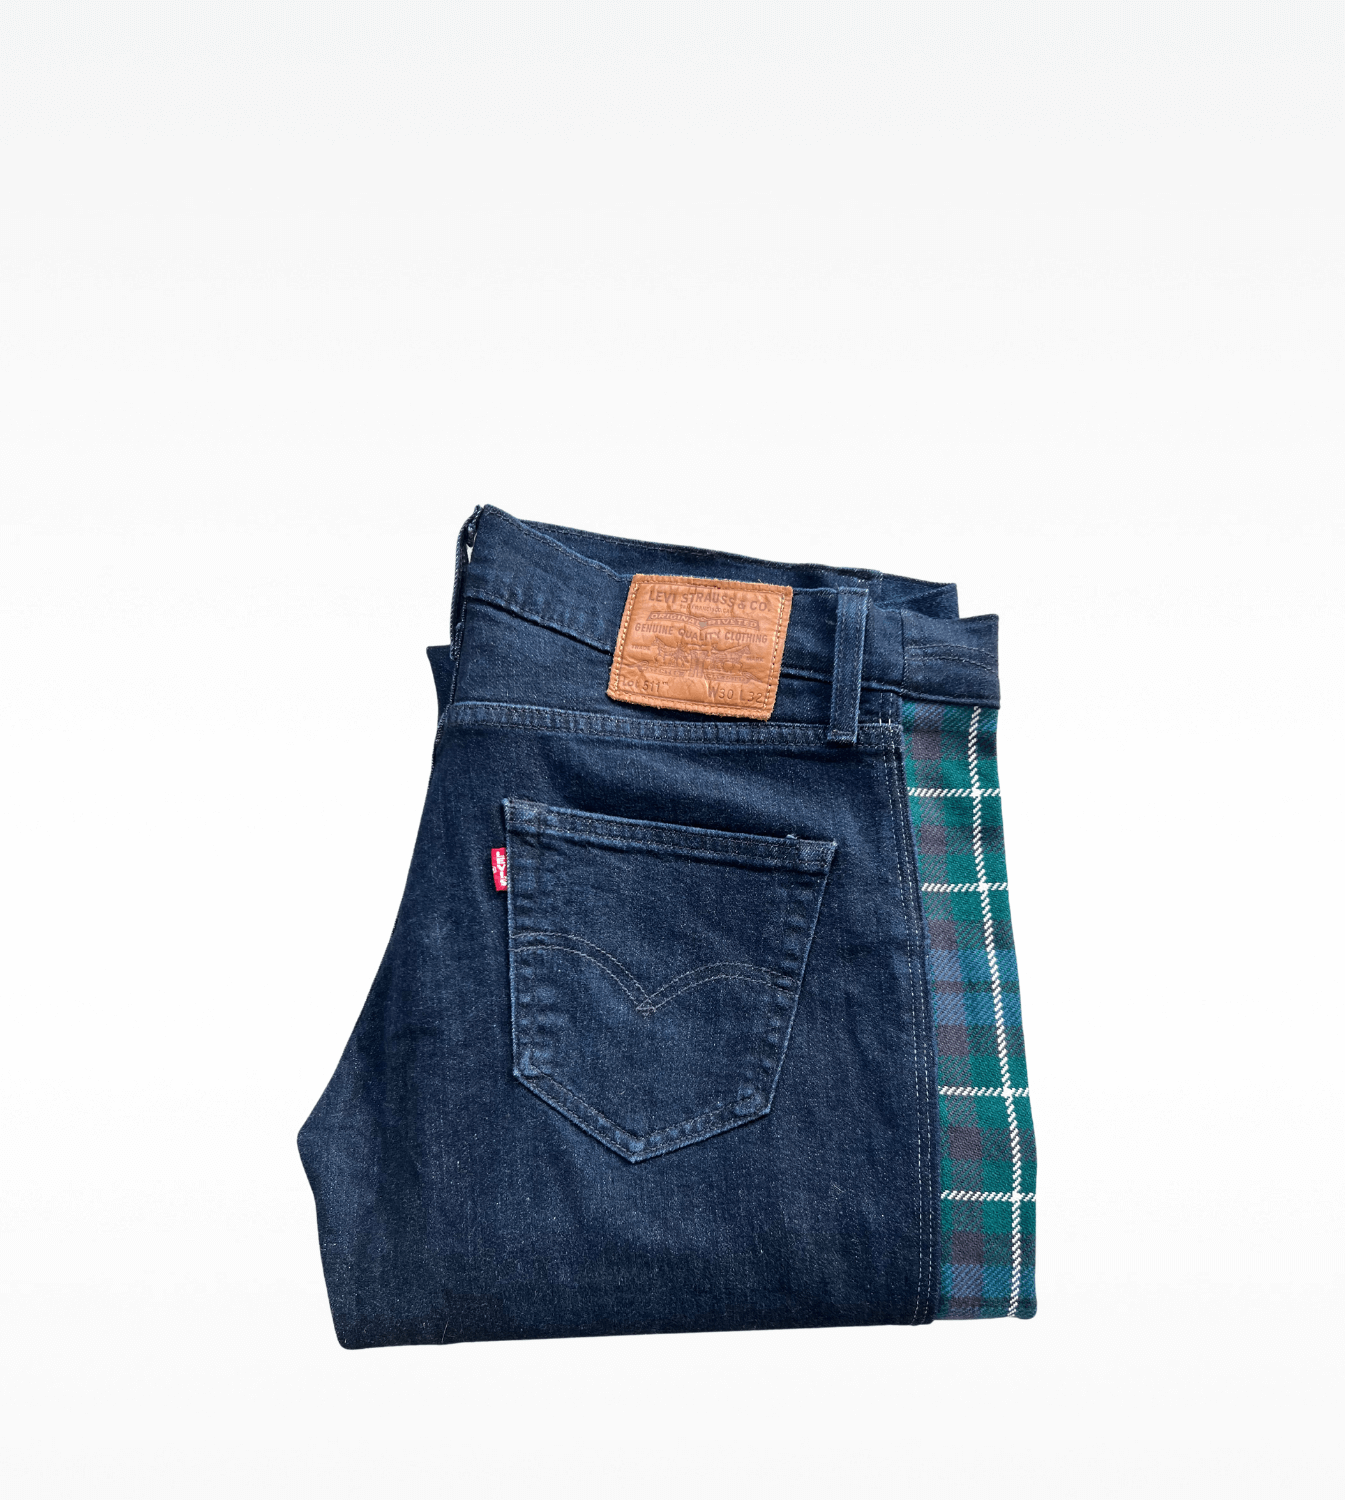 jeans-rework-levis511-2ndechance-madeinfrance-poche-details